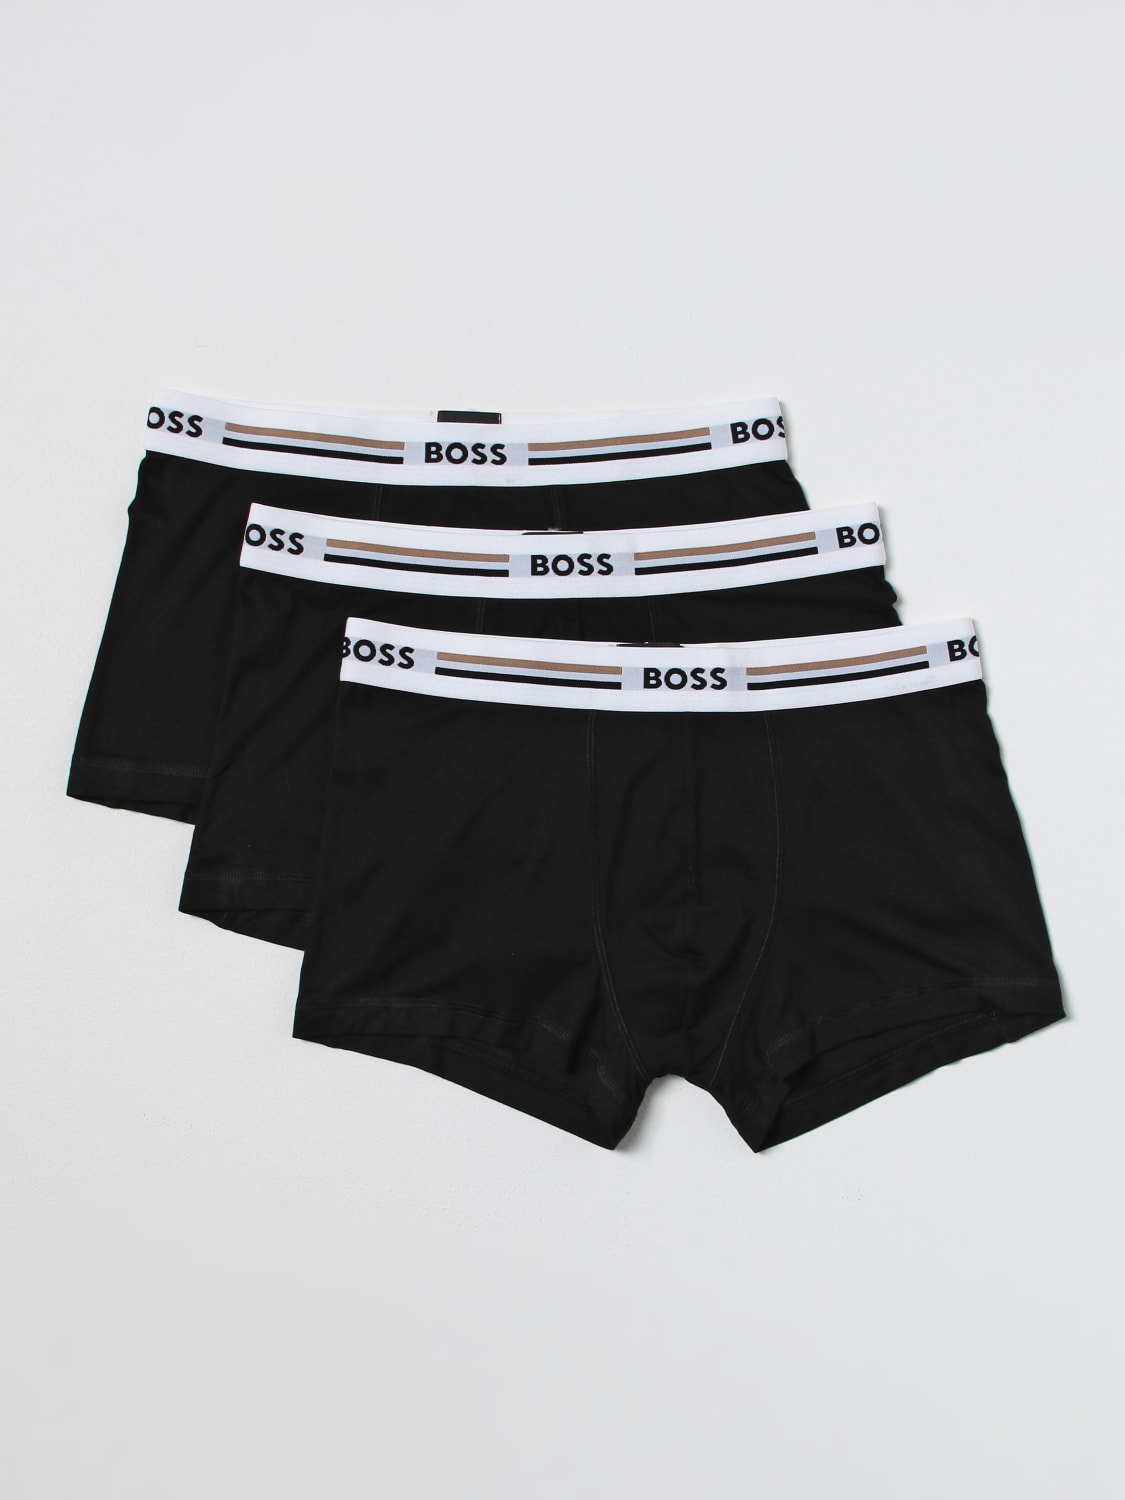 Vuggeviser varsel kaldenavn BOSS: underwear for man - Black | Boss underwear 50492200 online on  GIGLIO.COM